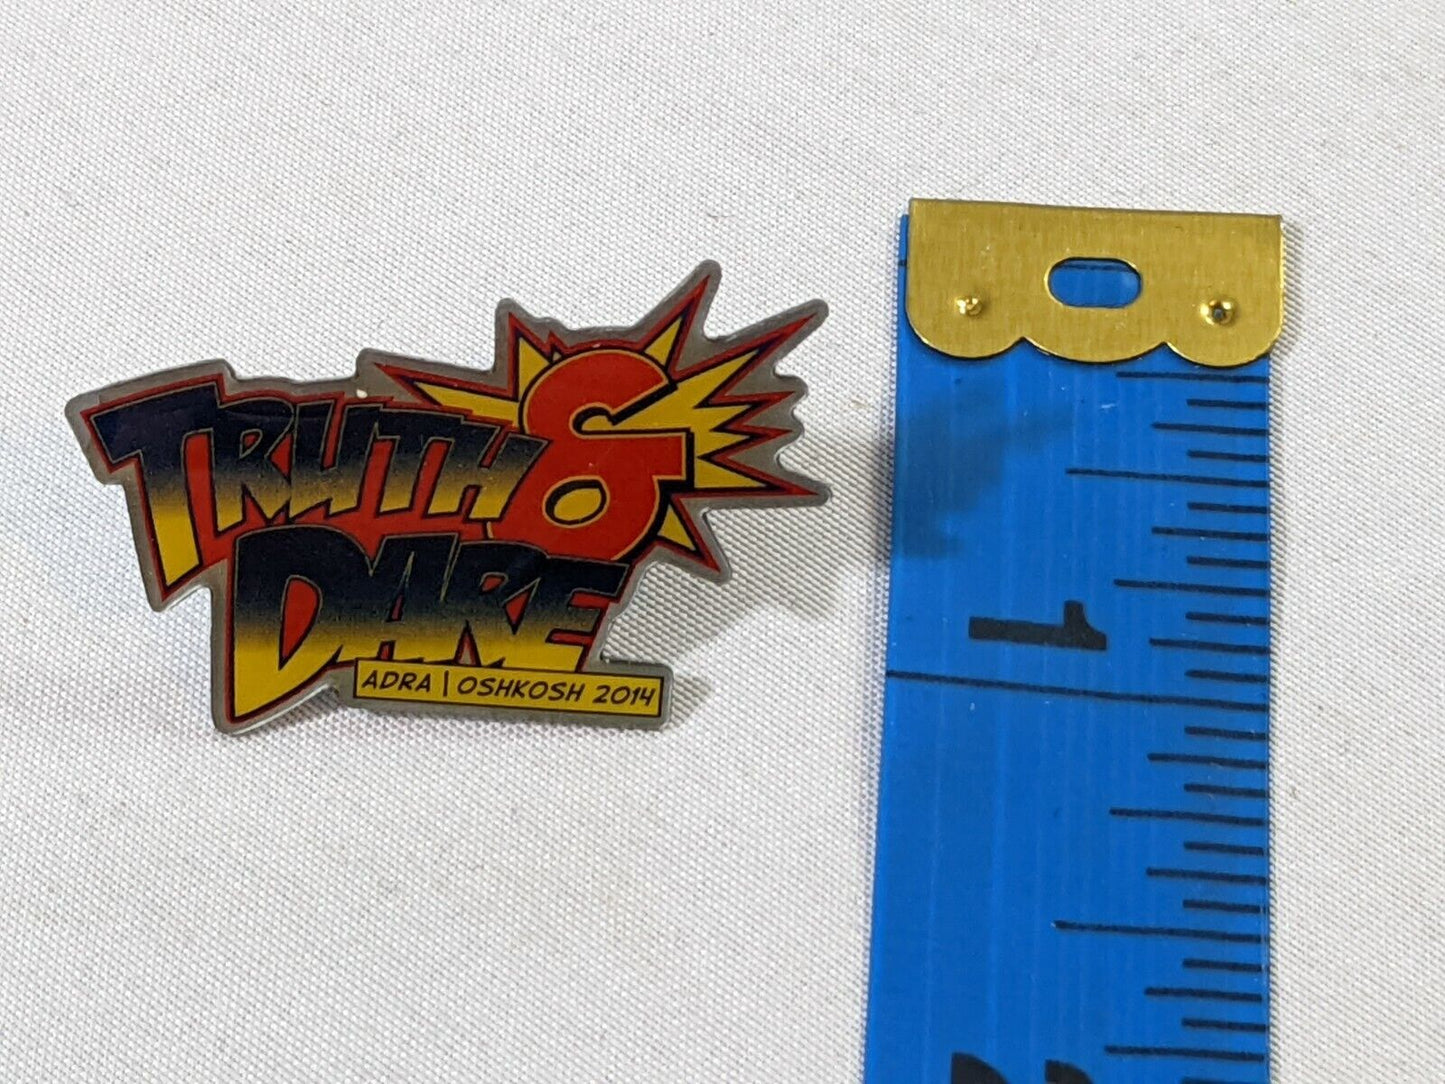 Truth & Dare Adra Oshkosh 2014 Collectible Lapel Pin Badge by Wild Pins